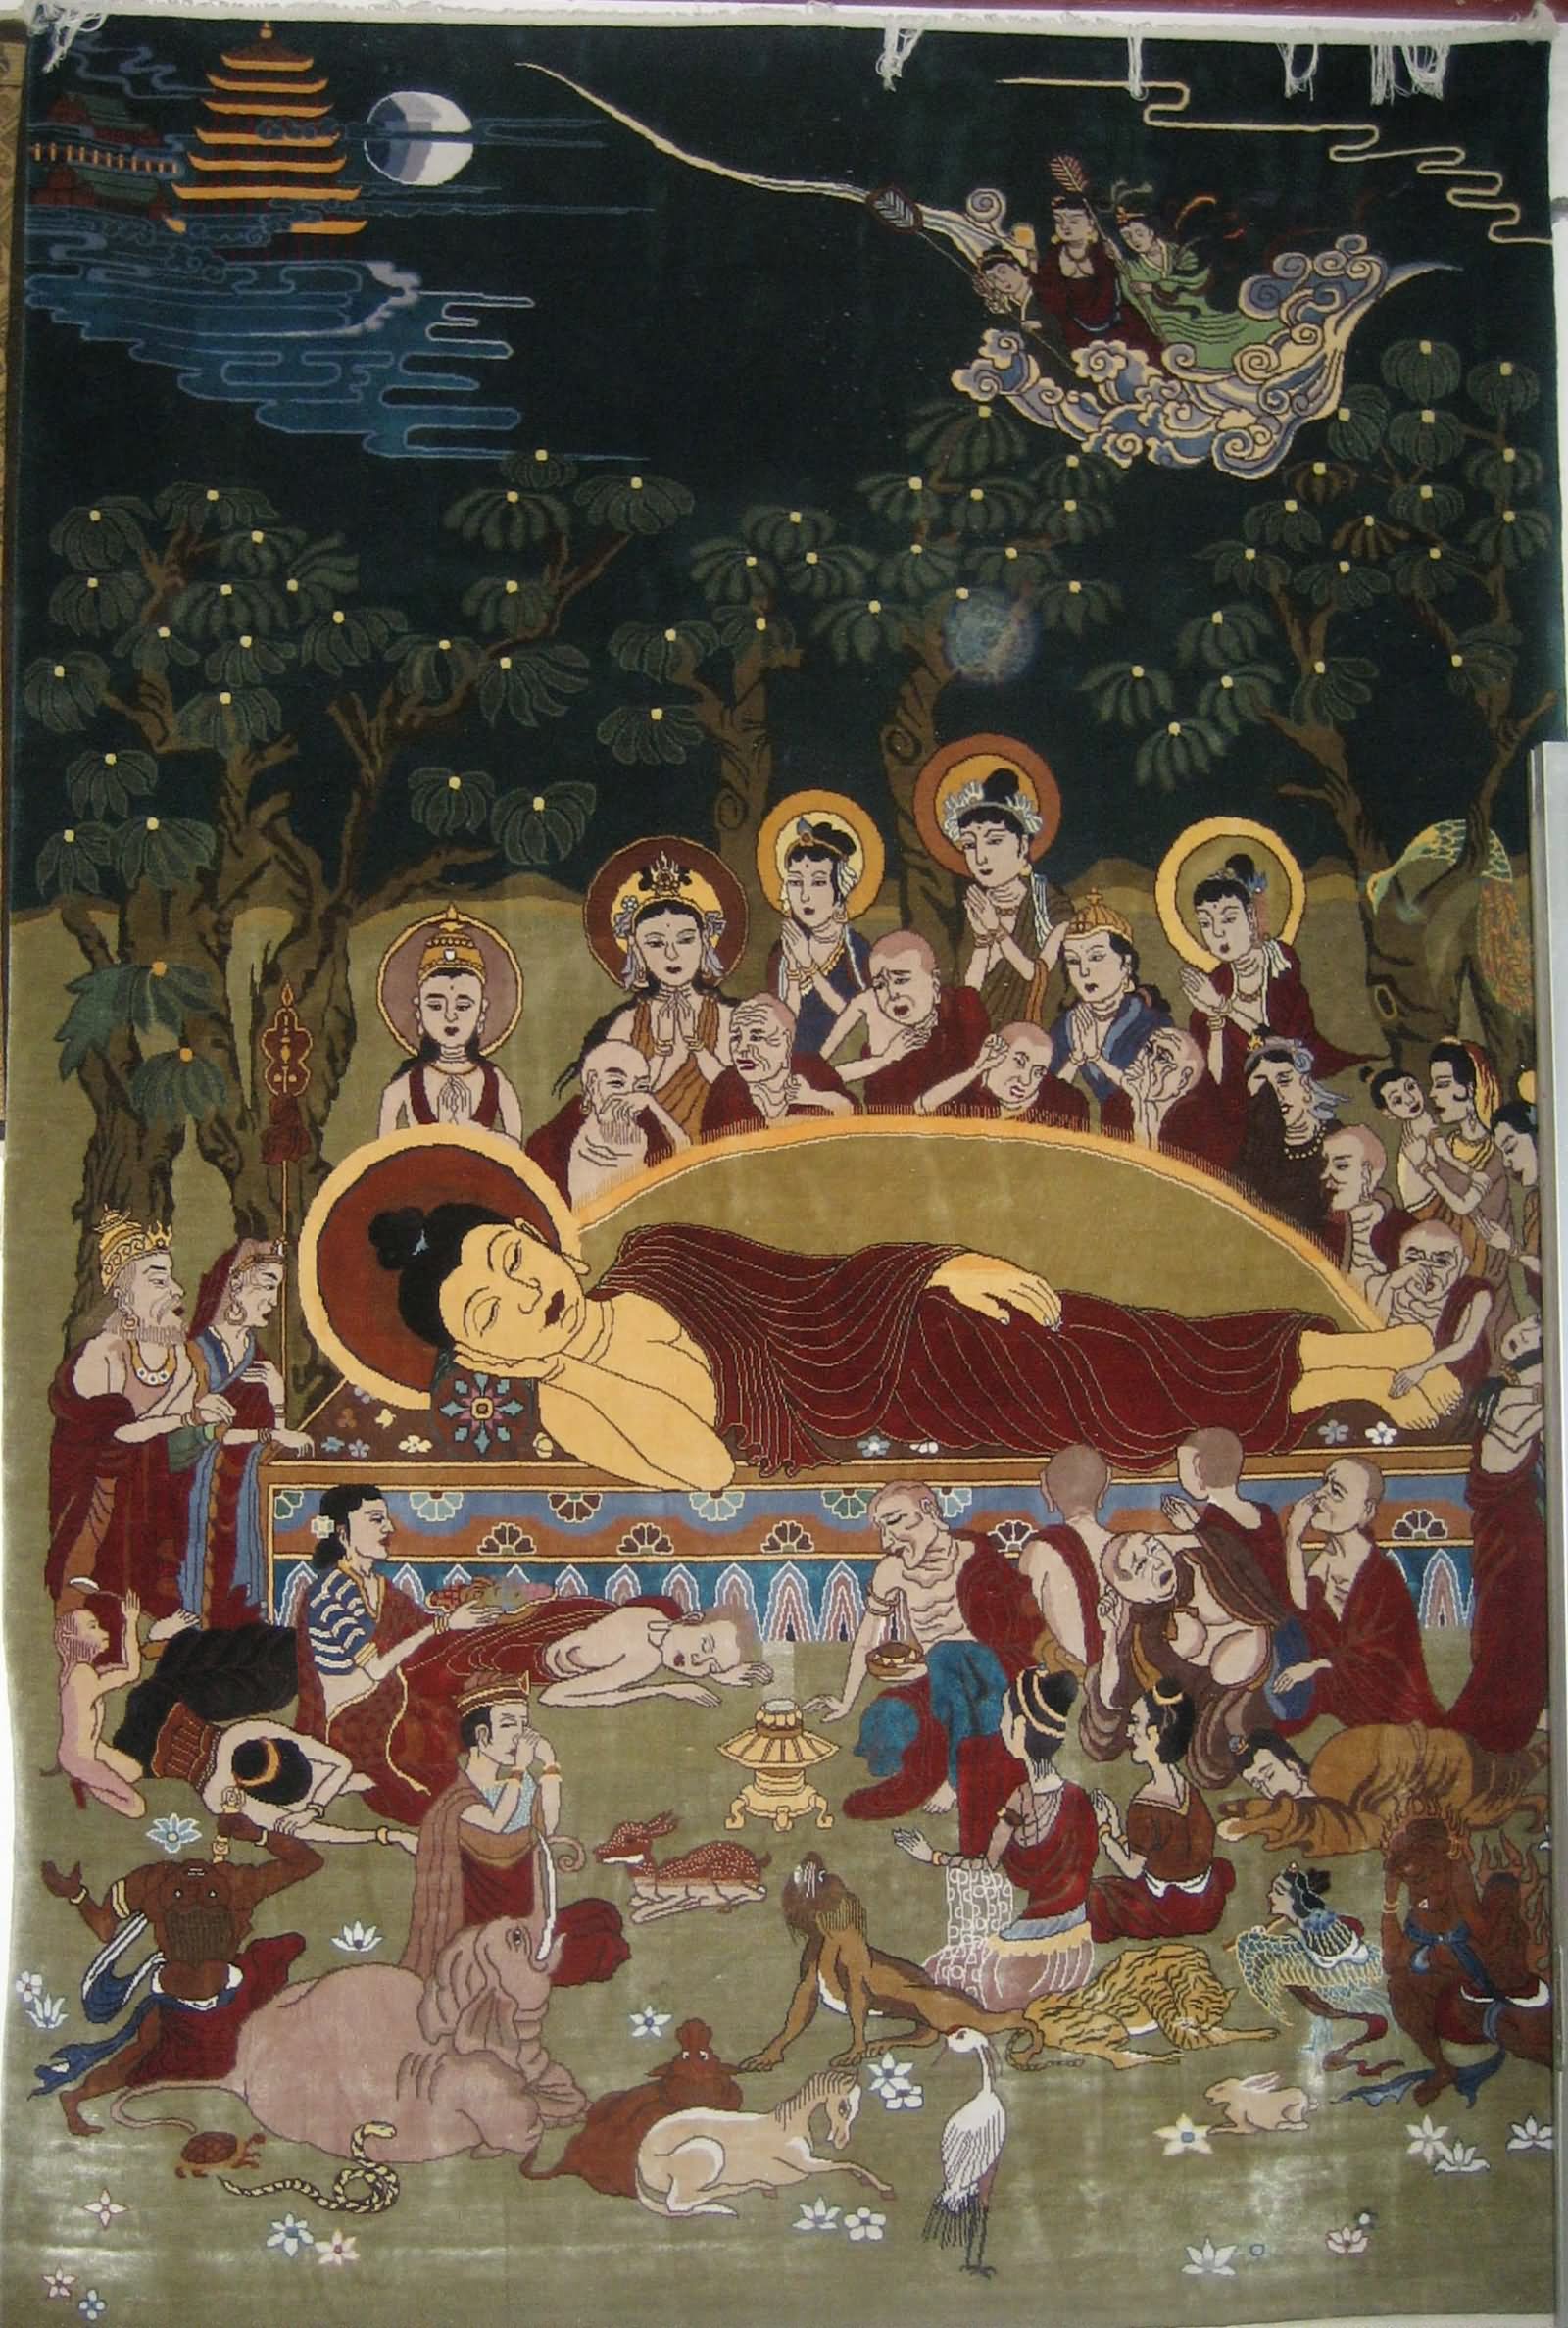 Sleeping Buddha Painting At The Mogao Caves